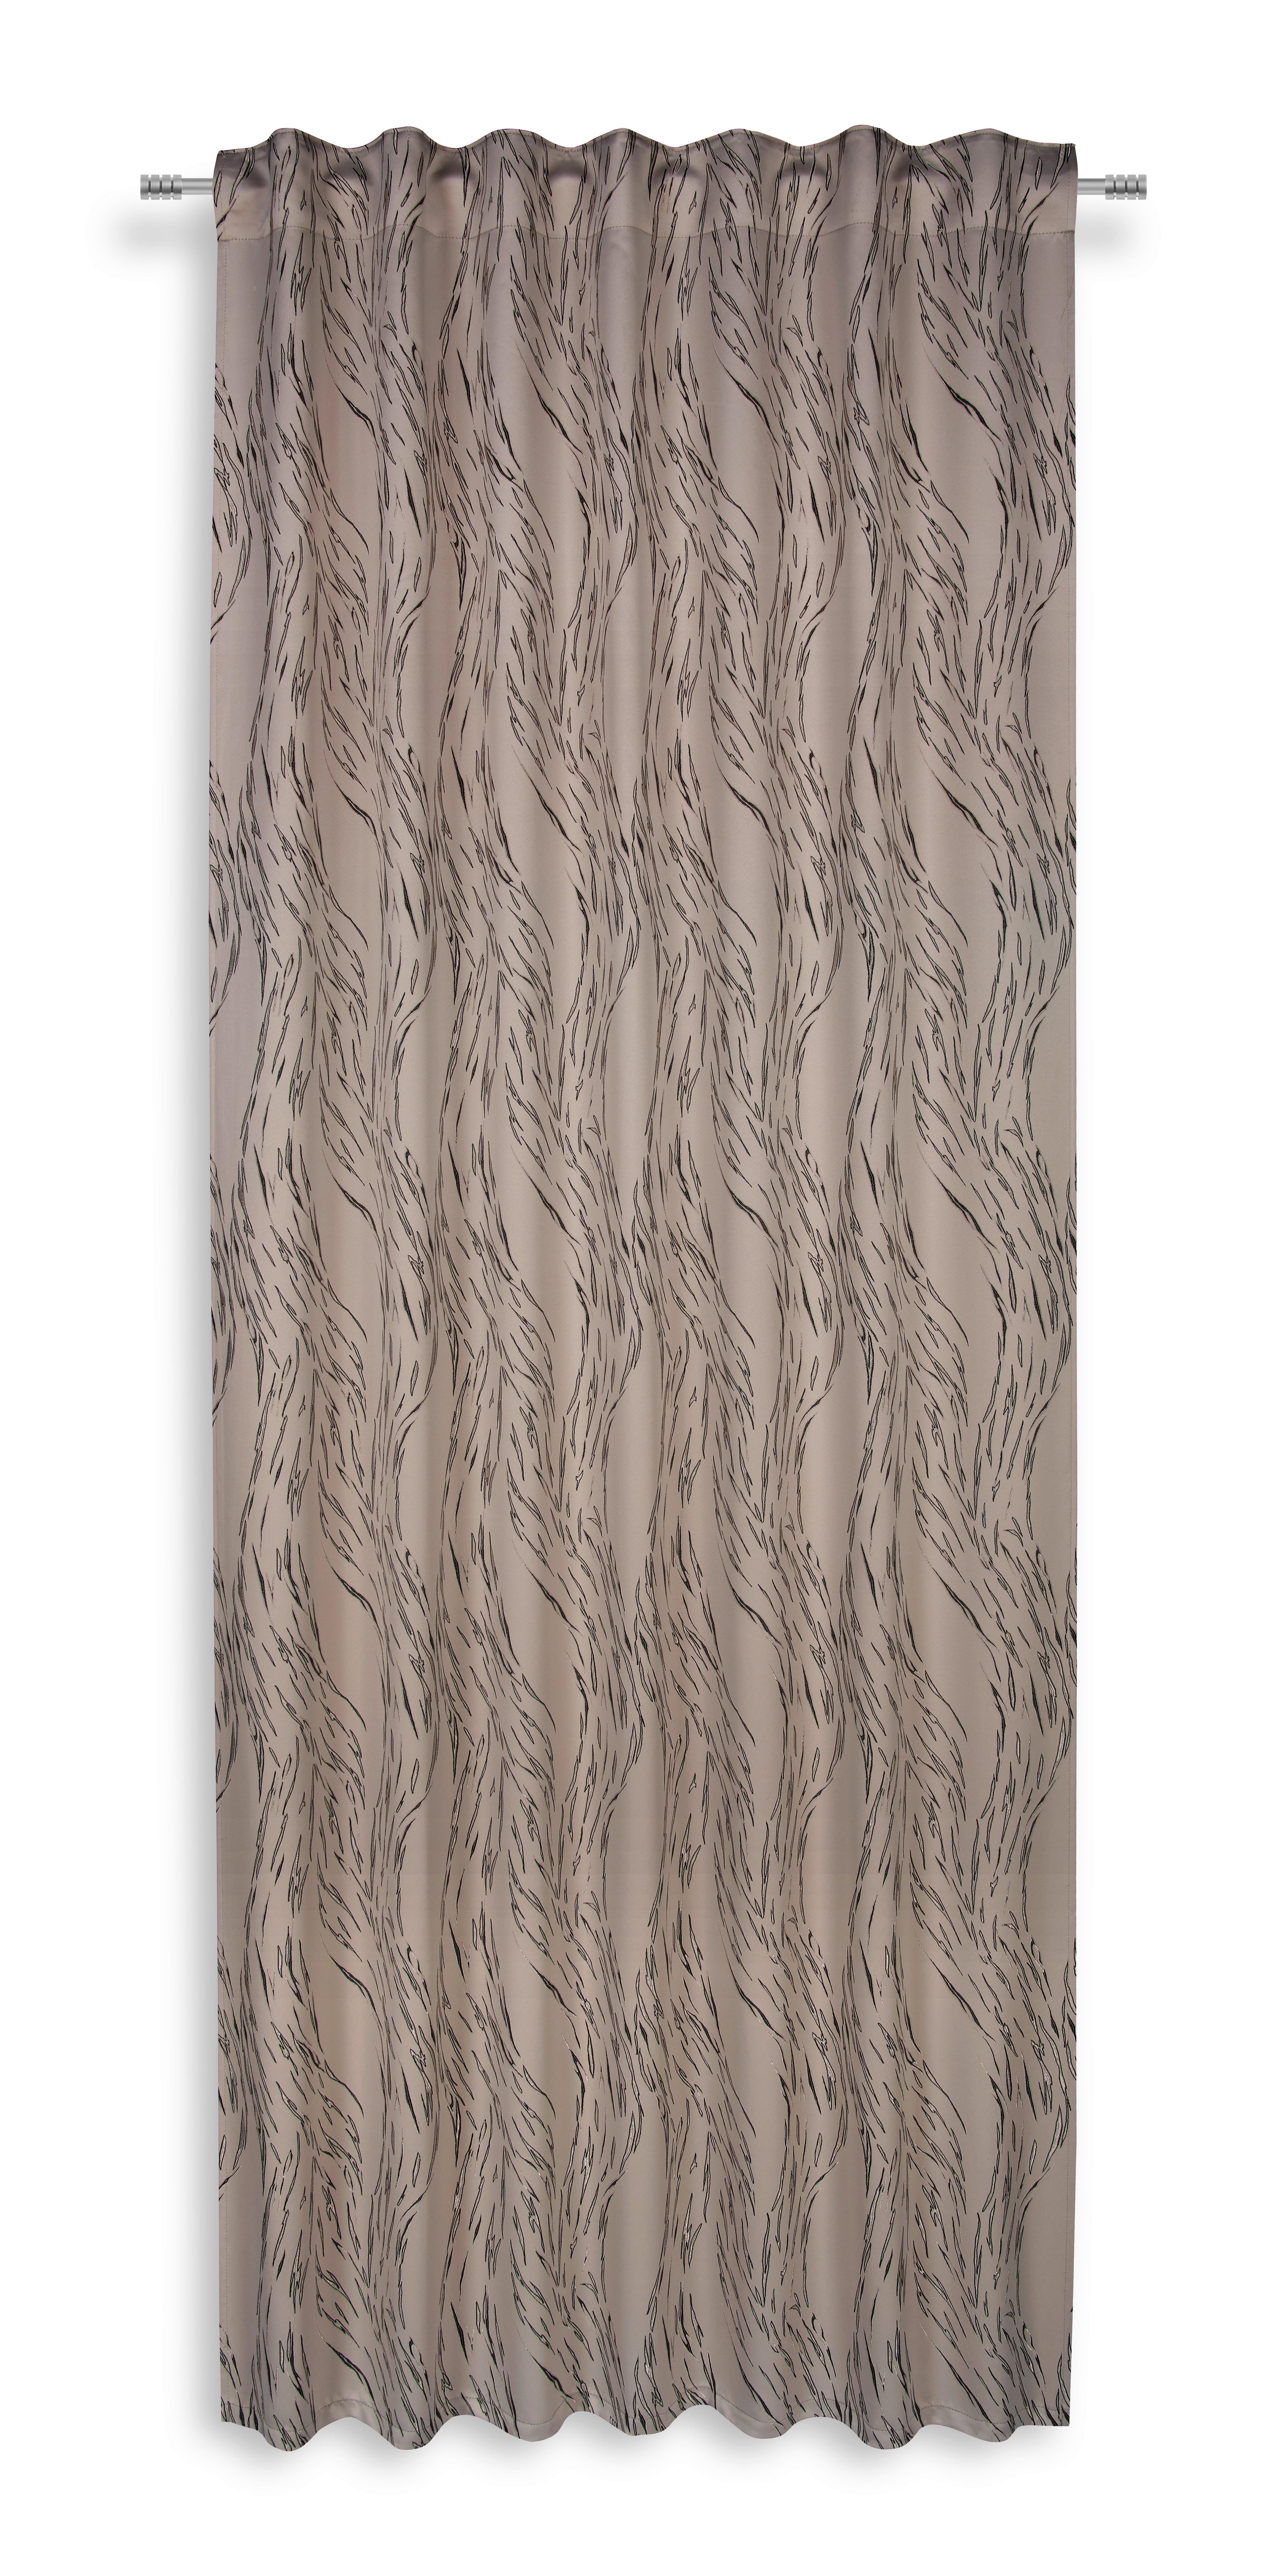 Vorhang mit Multifunktionsband Carina 140x245 cm Taupe - Taupe, MODERN, Textil (140/245cm) - Luca Bessoni